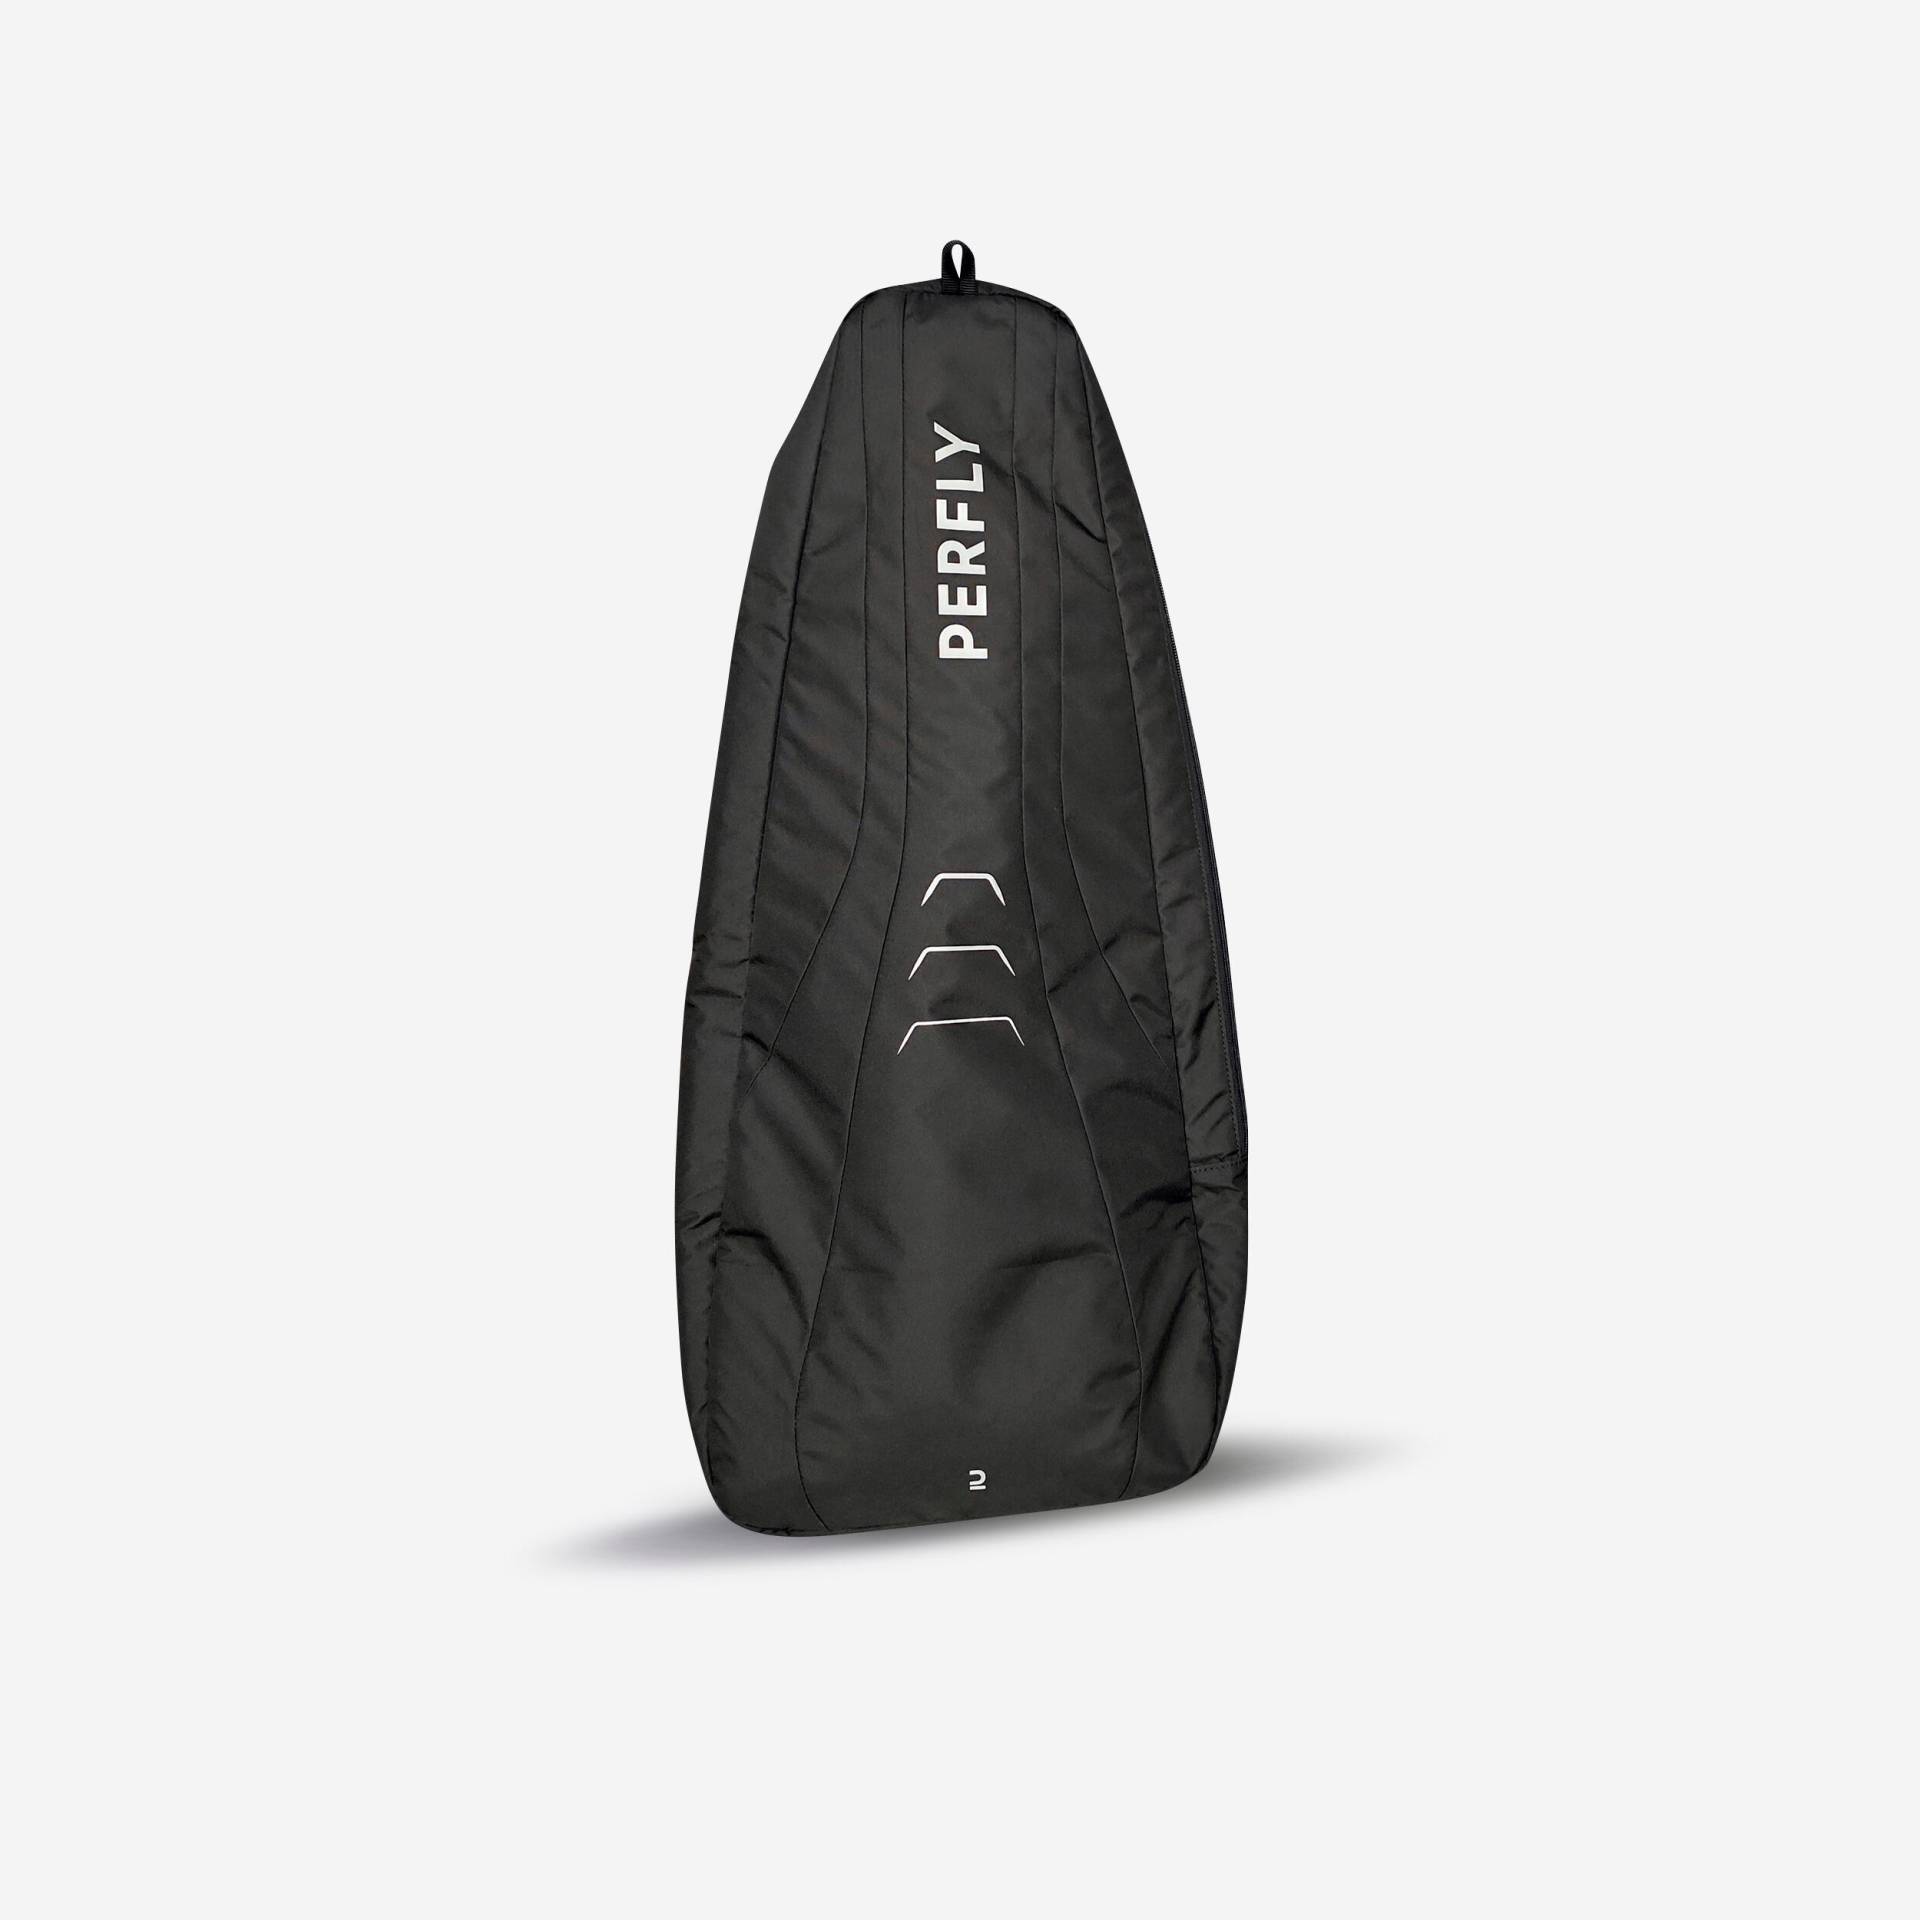 Rucksack Squash - SL 100 Backpack 15L von PERFLY